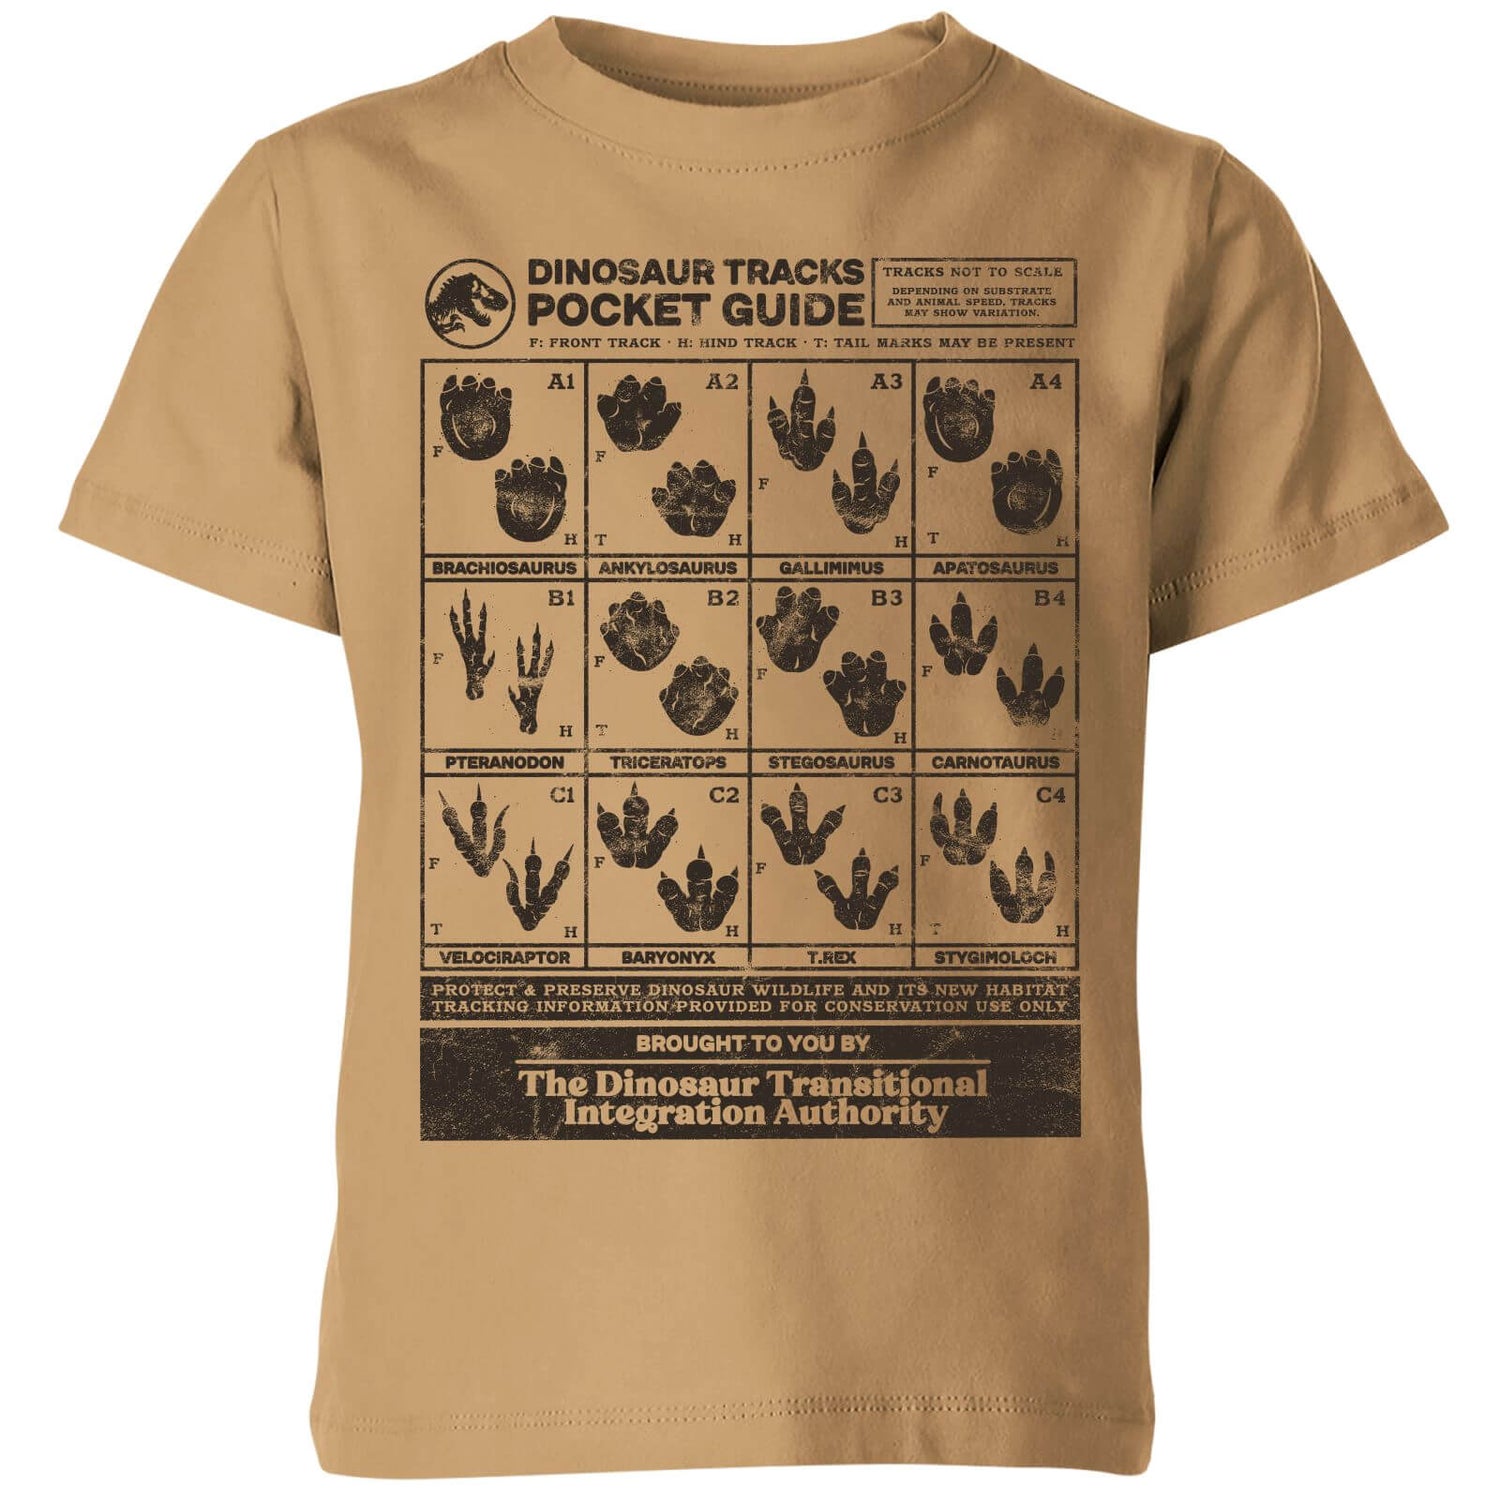 Jurassic World Dino Tracks Pocket Guide Kids' T-Shirt - Tan